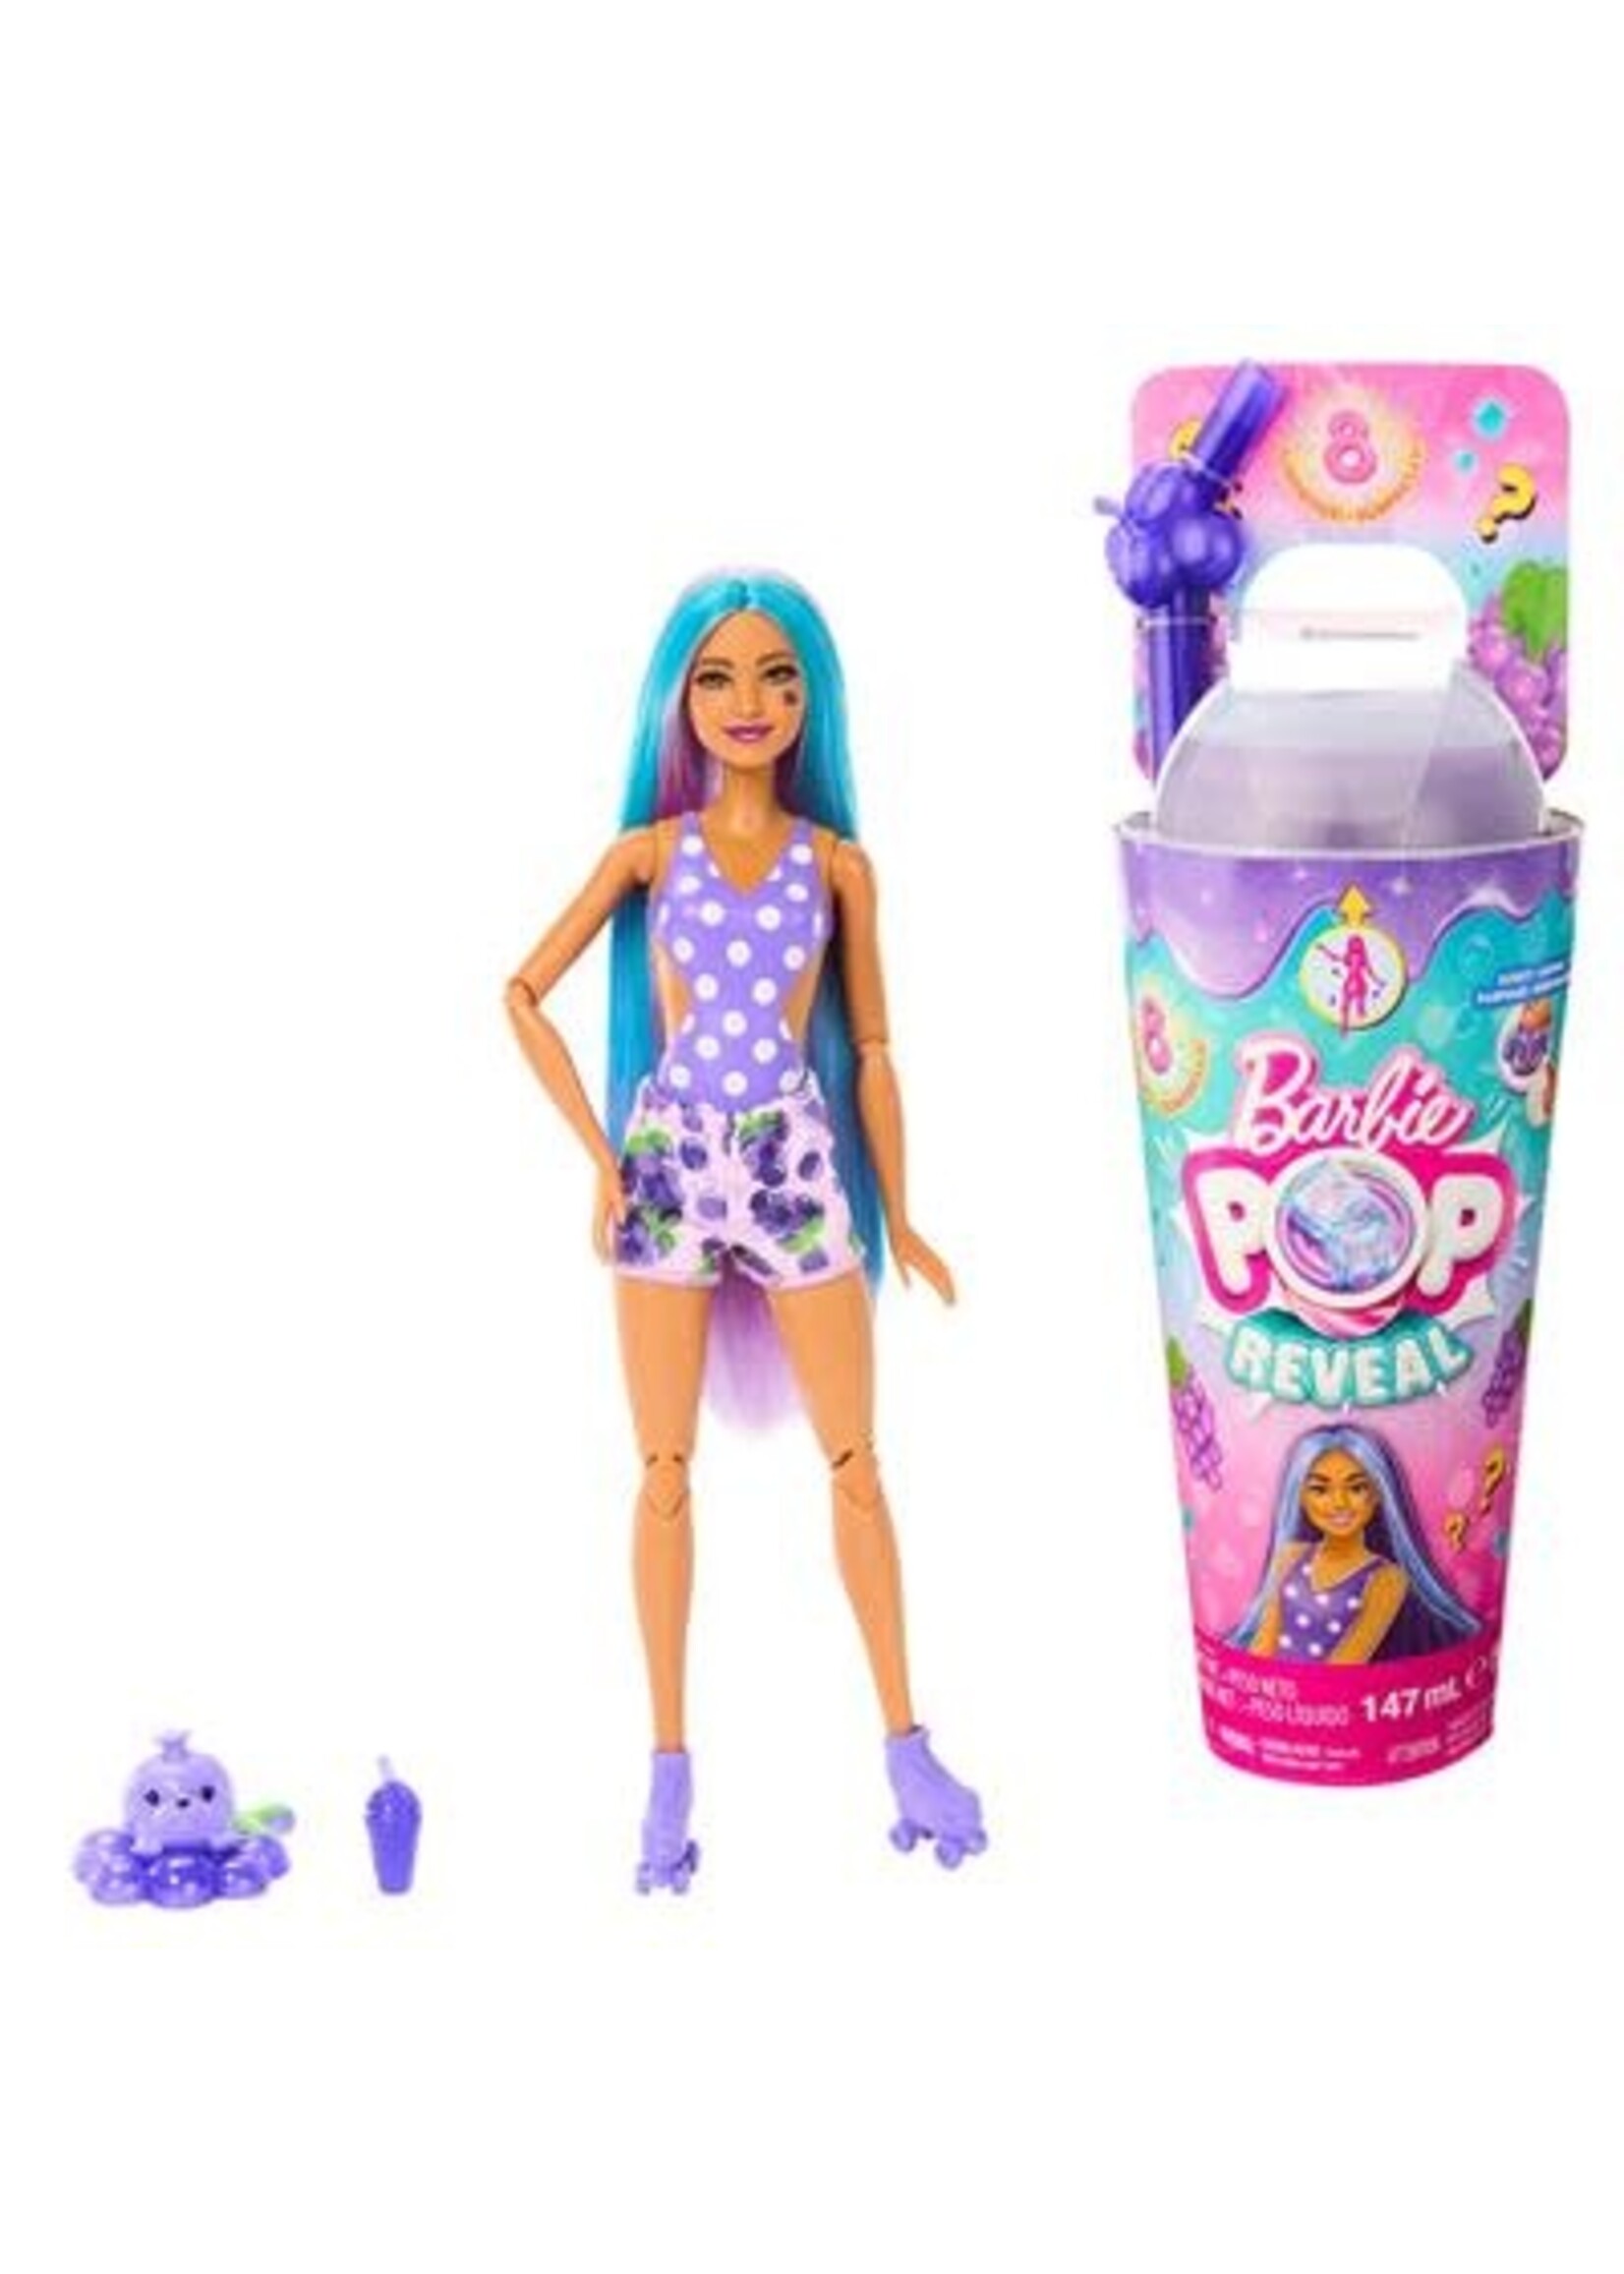 Mattel Games Barbie Pop Reveal Grape Fizz